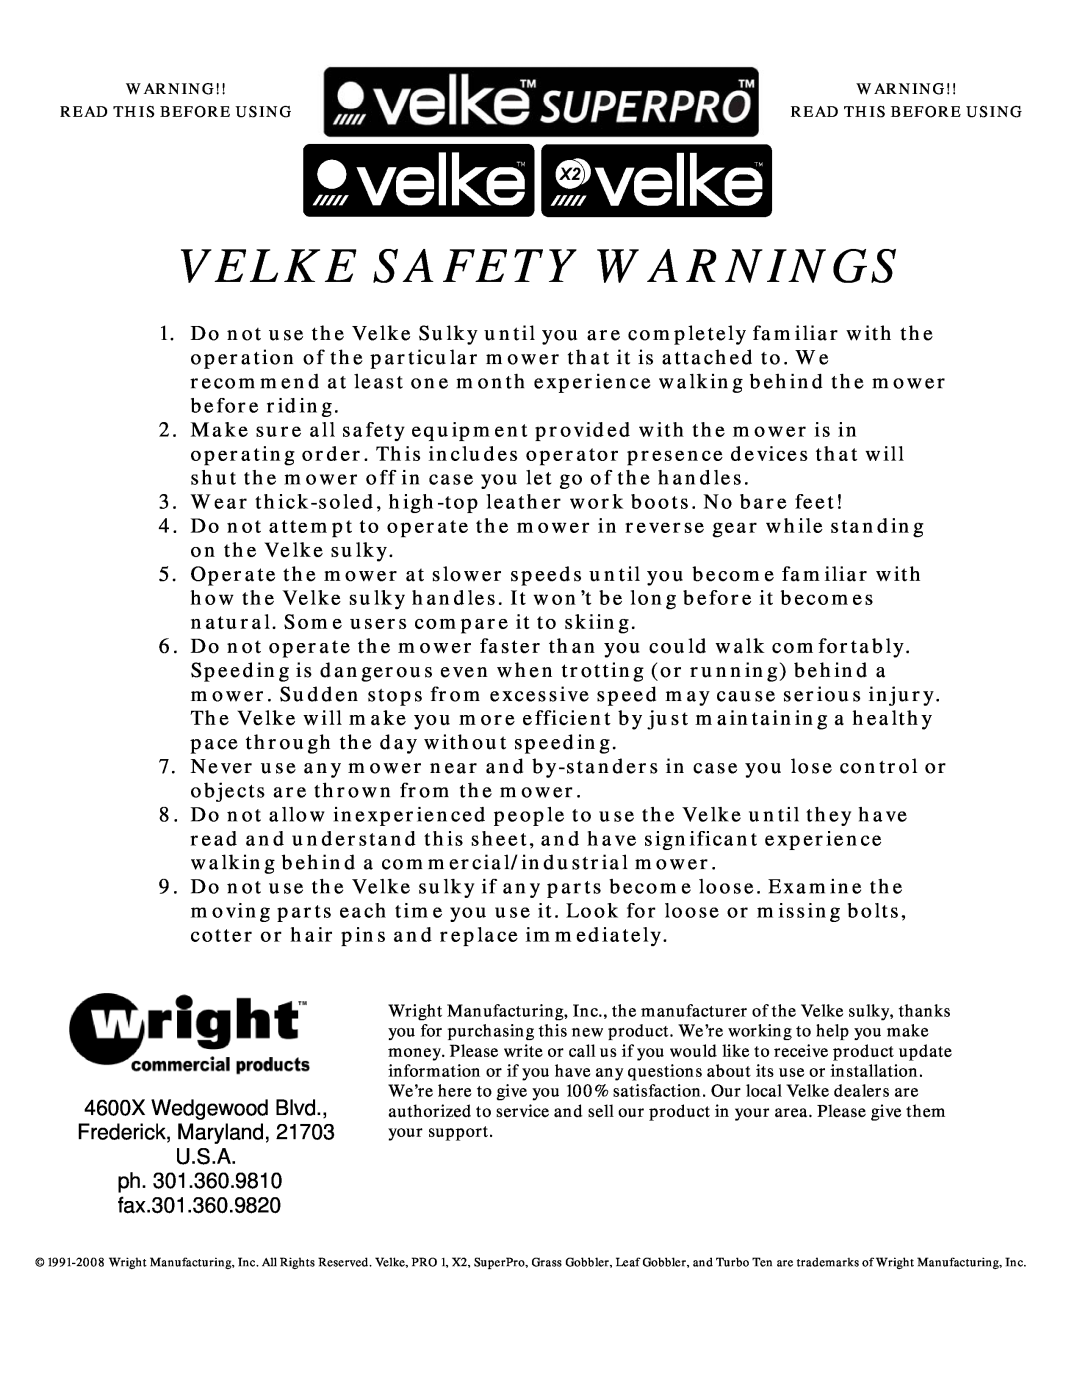 Wright Manufacturing B)-15, VK200-2, SC Velke Safety Warnings, 4600X Wedgewood Blvd Frederick, Maryland, U.S.A 